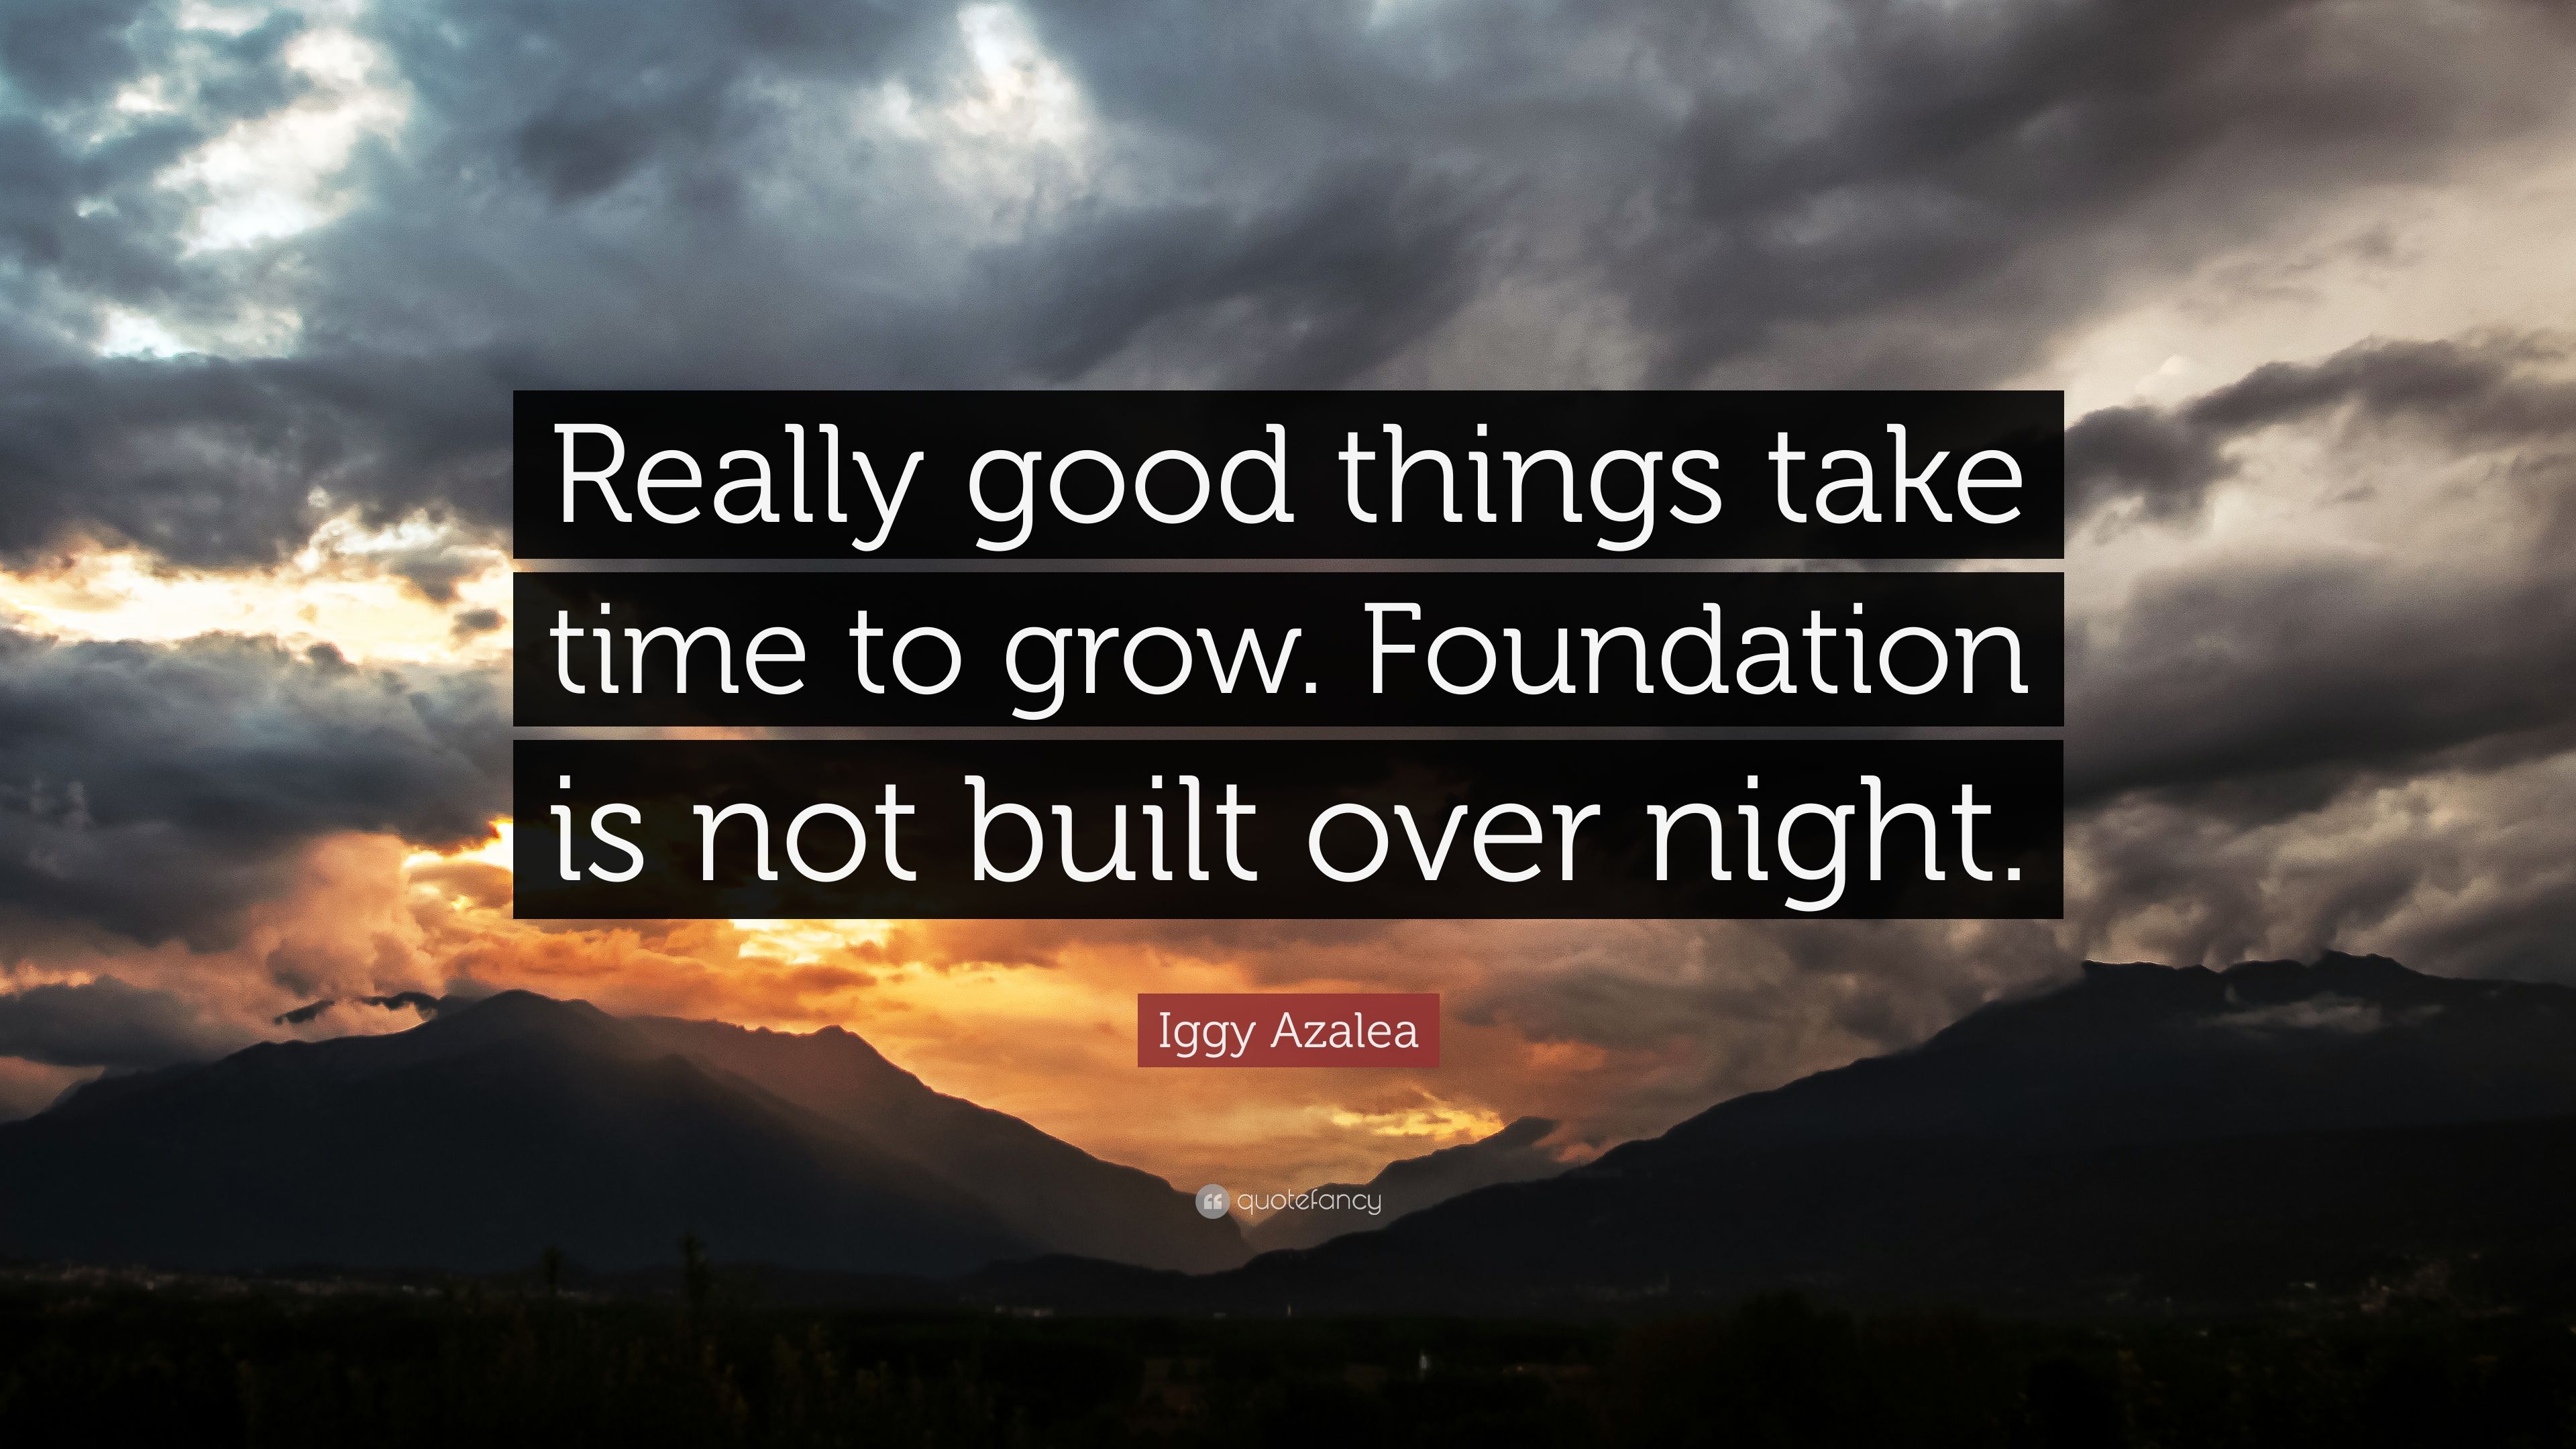 Iggy Azalea Quote: “Really good things take time to grow